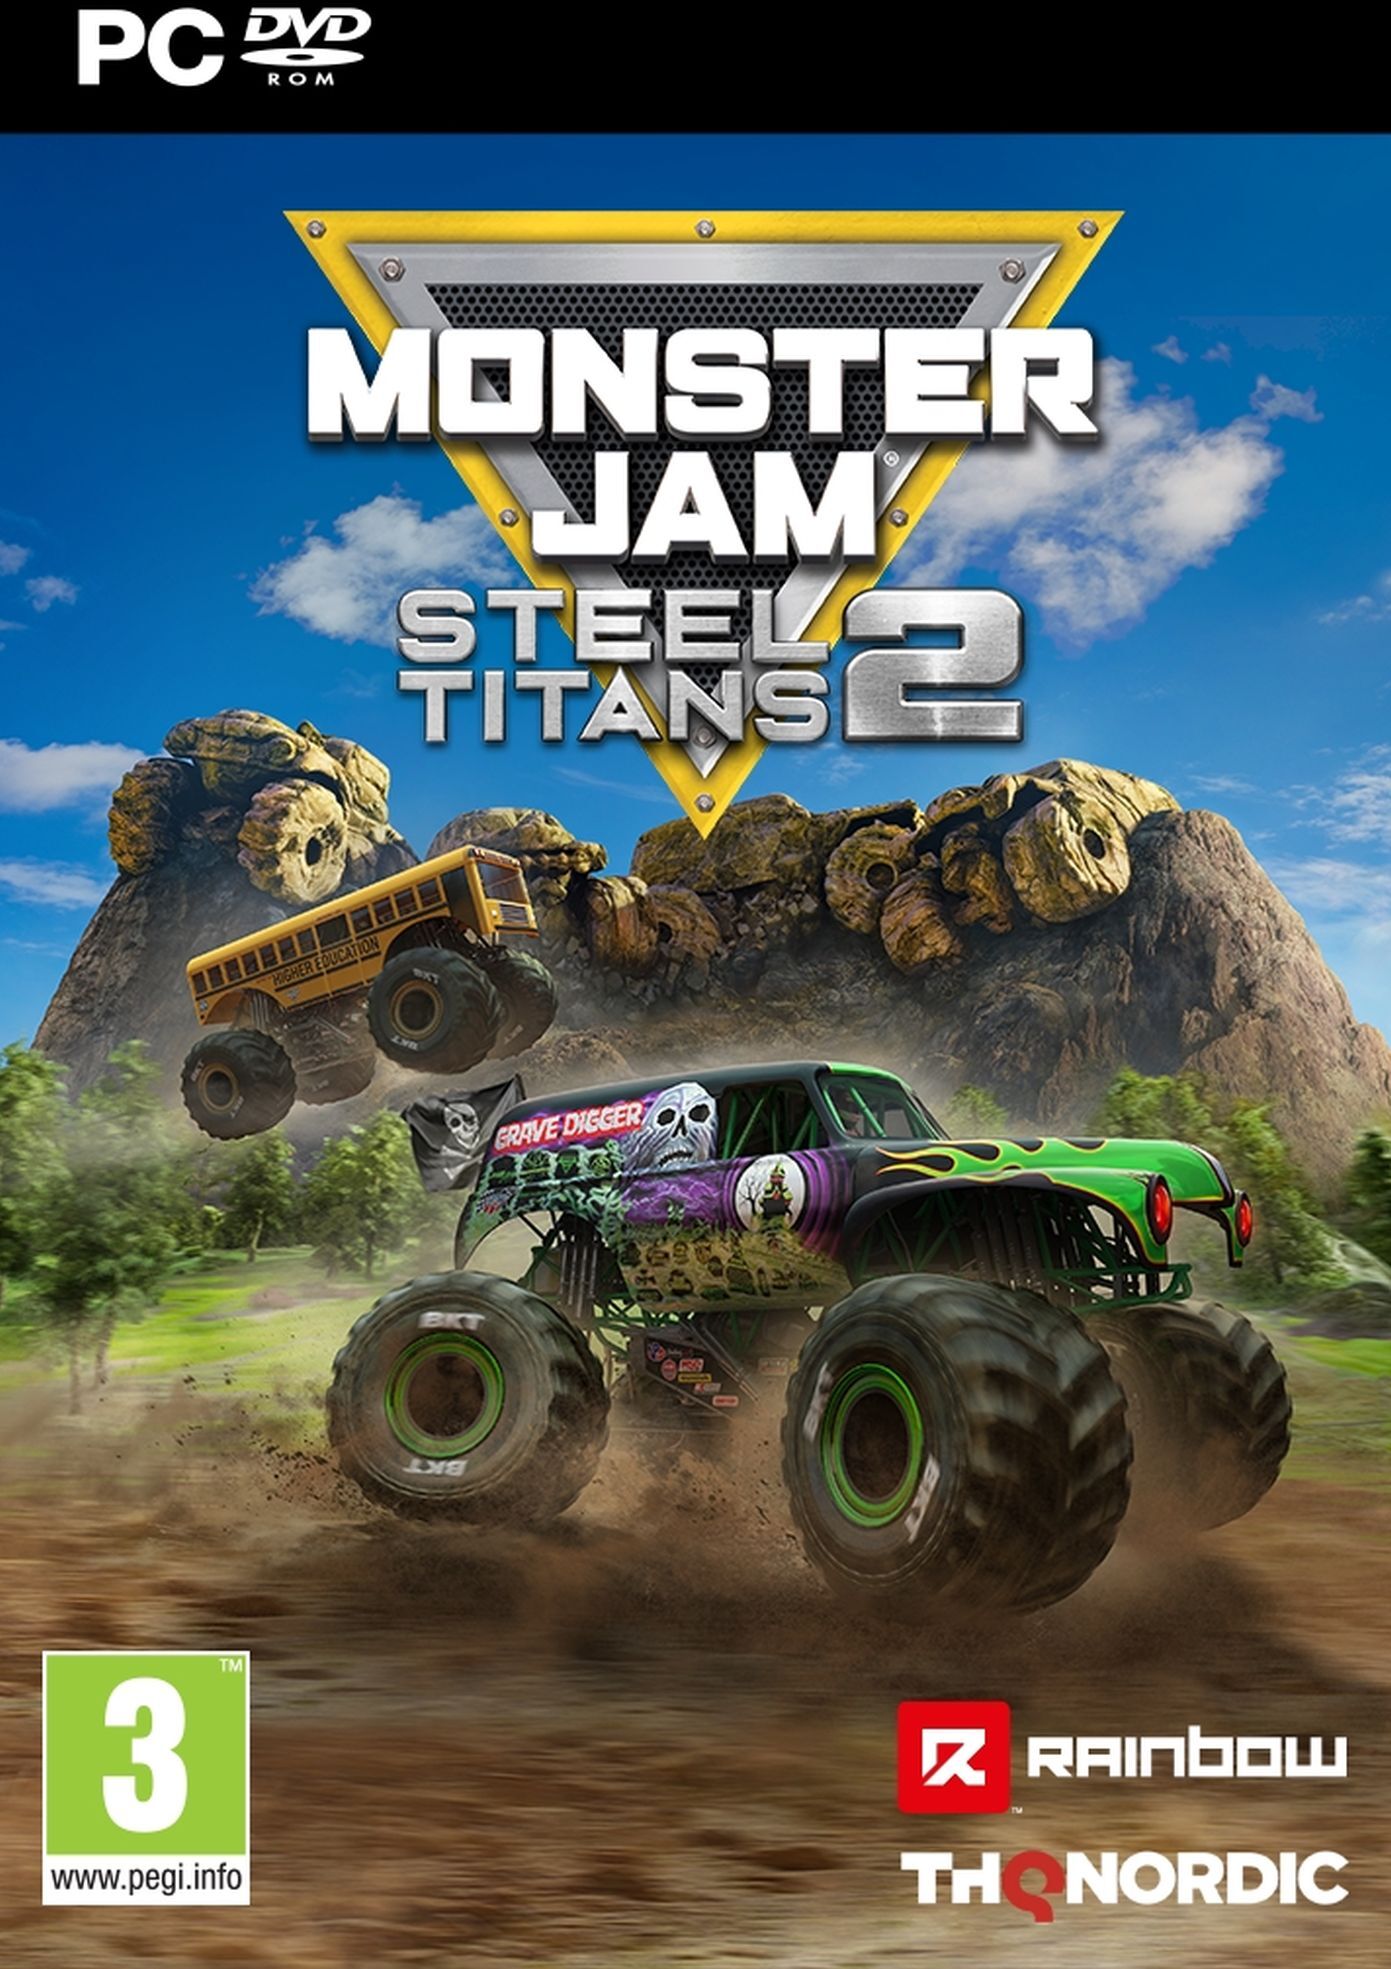 THQ Nordic - Monster Jam Steel Titans 2 [PC] (F/I)